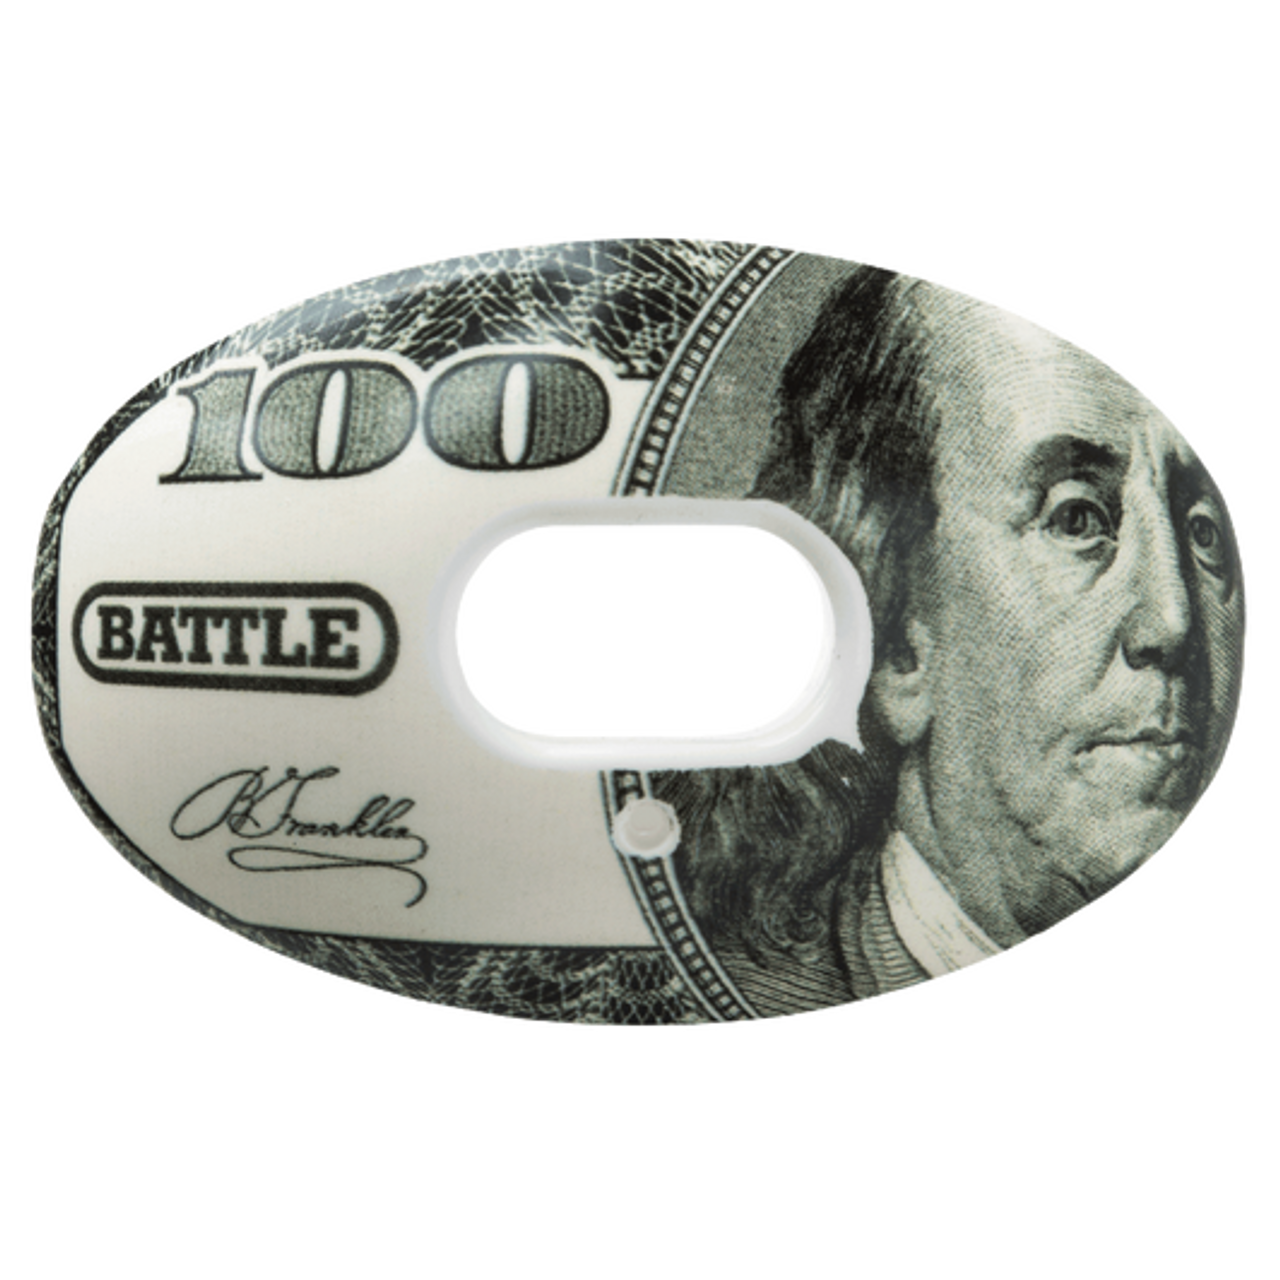 Benjamin $100 Bill 8282 Football Mouthpiece - Lace It Up Kauai, Inc